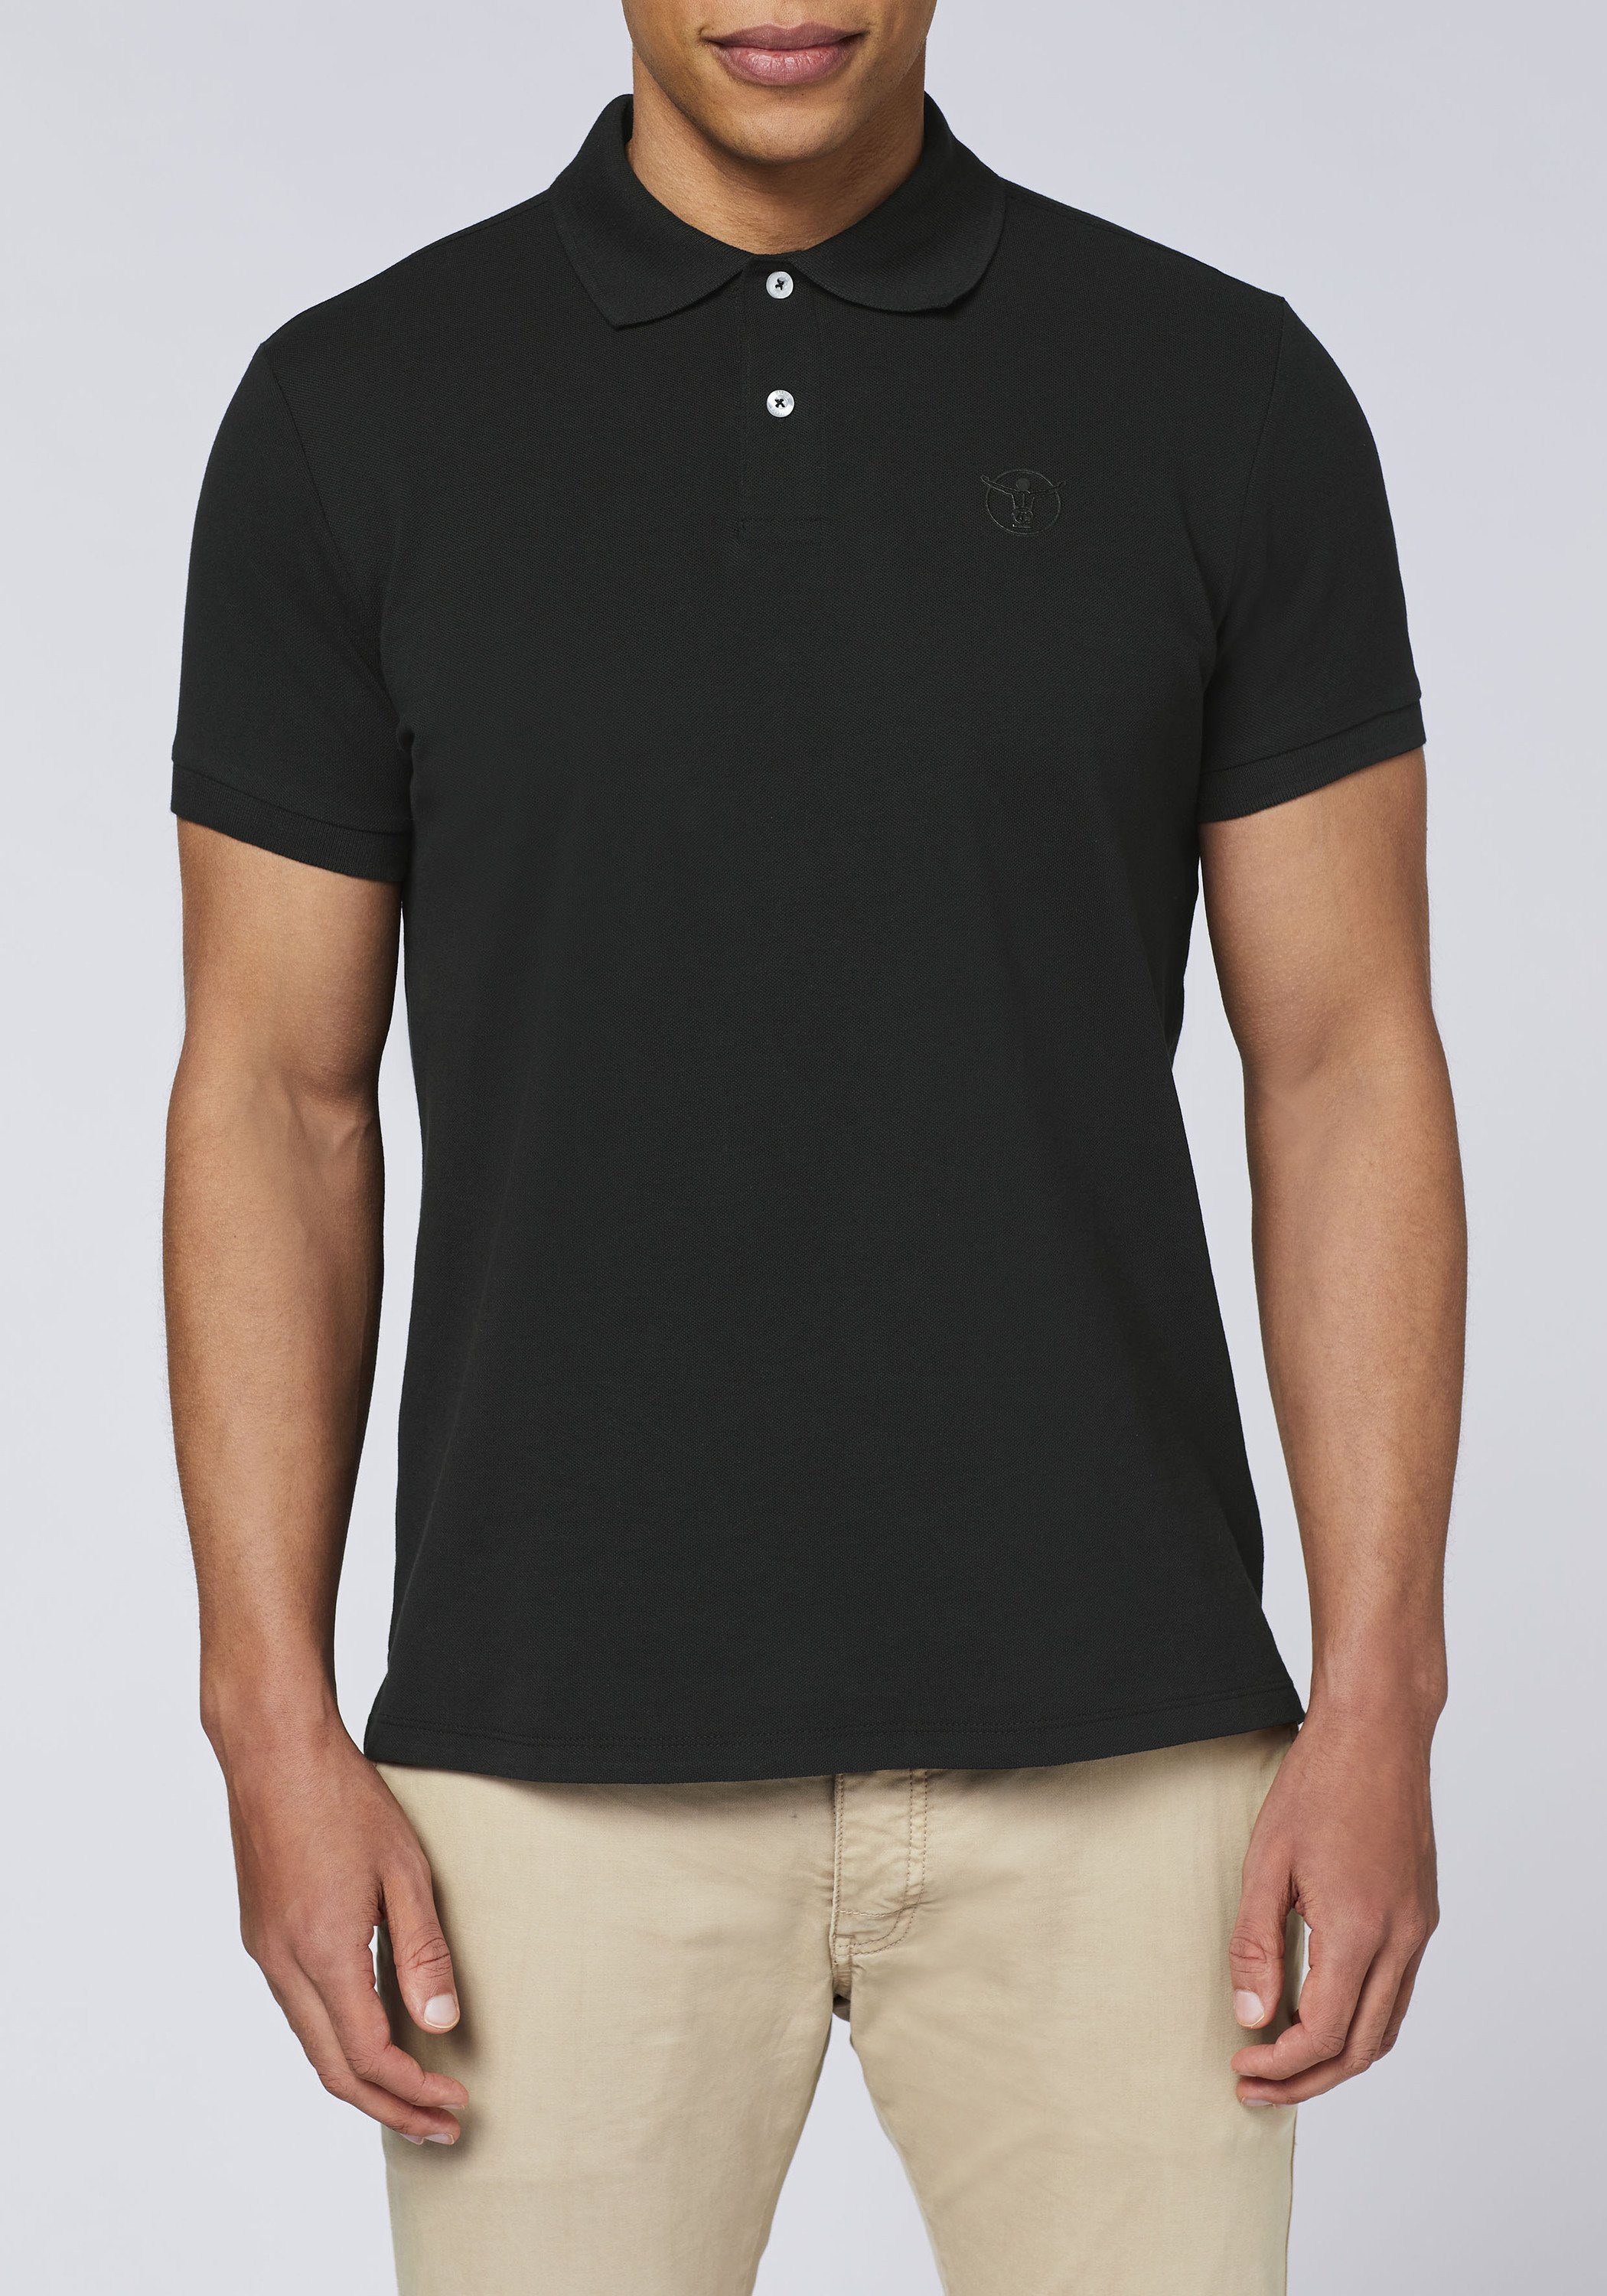 1 Jumper-Logo Poloshirt mit Poloshirt Black Beauty Chiemsee 19-3911